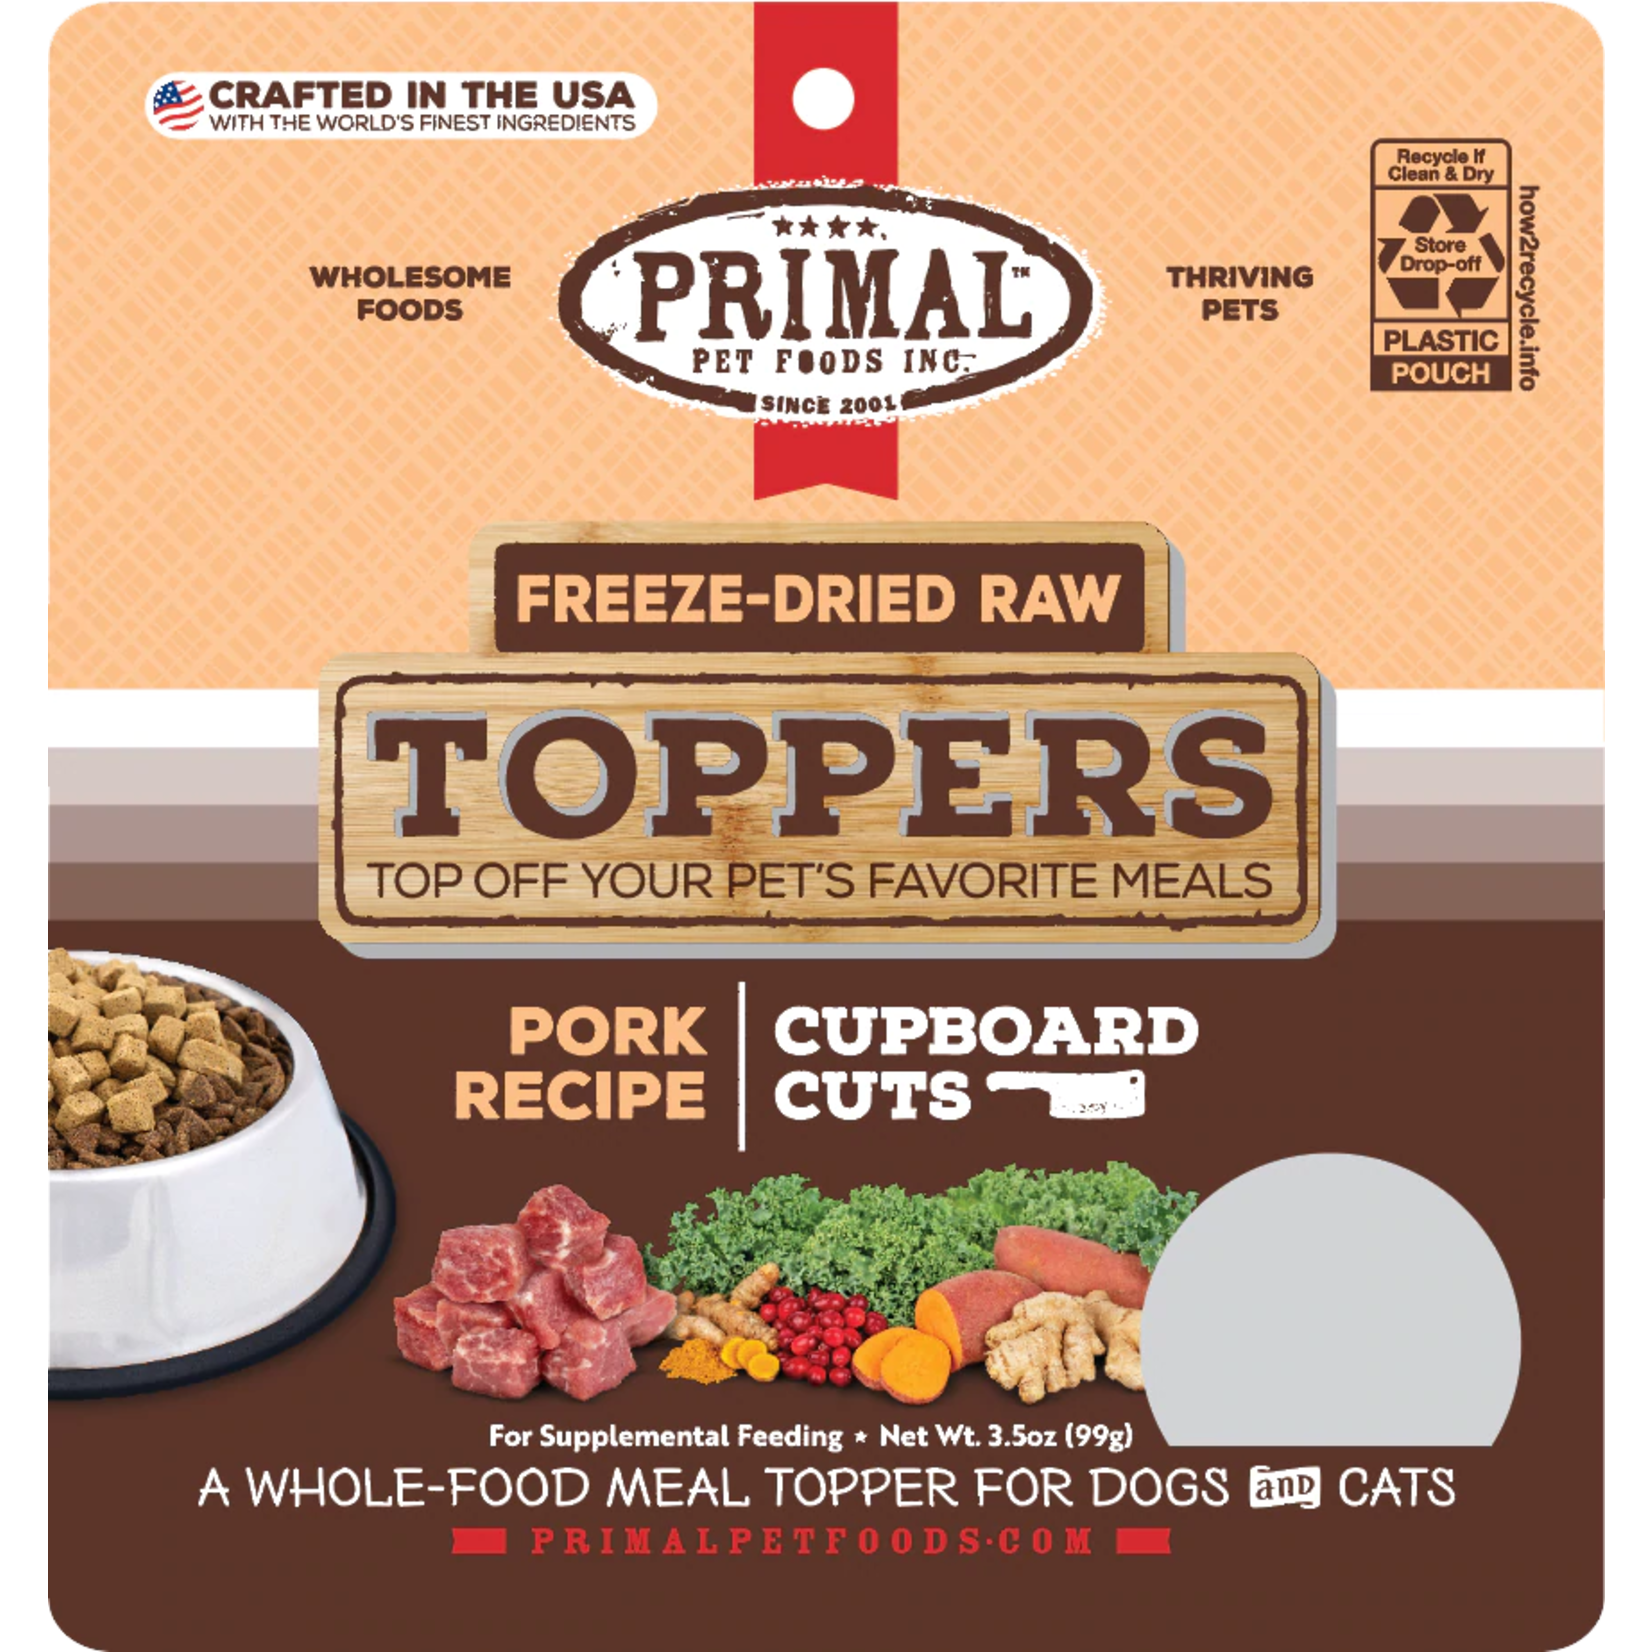 Primal Pet Foods Primal Freeze-Dried Raw Toppers - Pork Recipe Cupboard Cuts